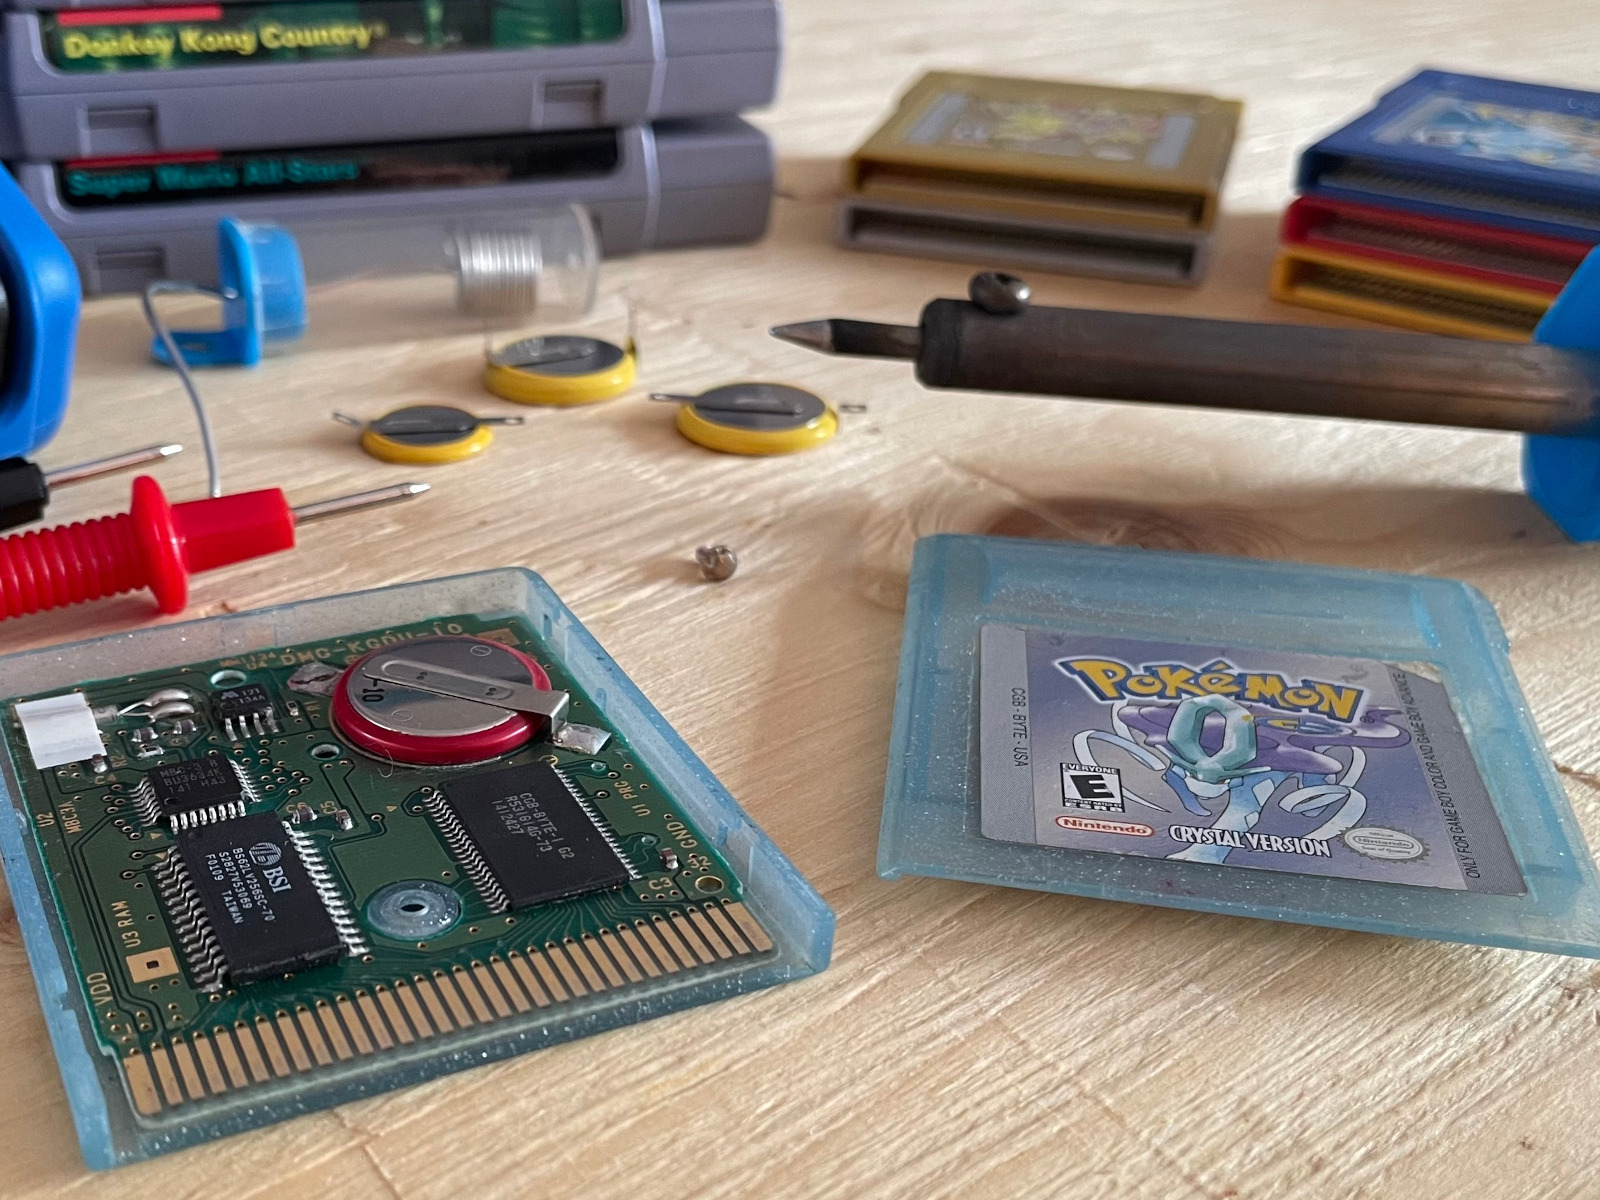 Cartouche Game Boy Color en cours de remplacement de sa pile de sauvegarde.